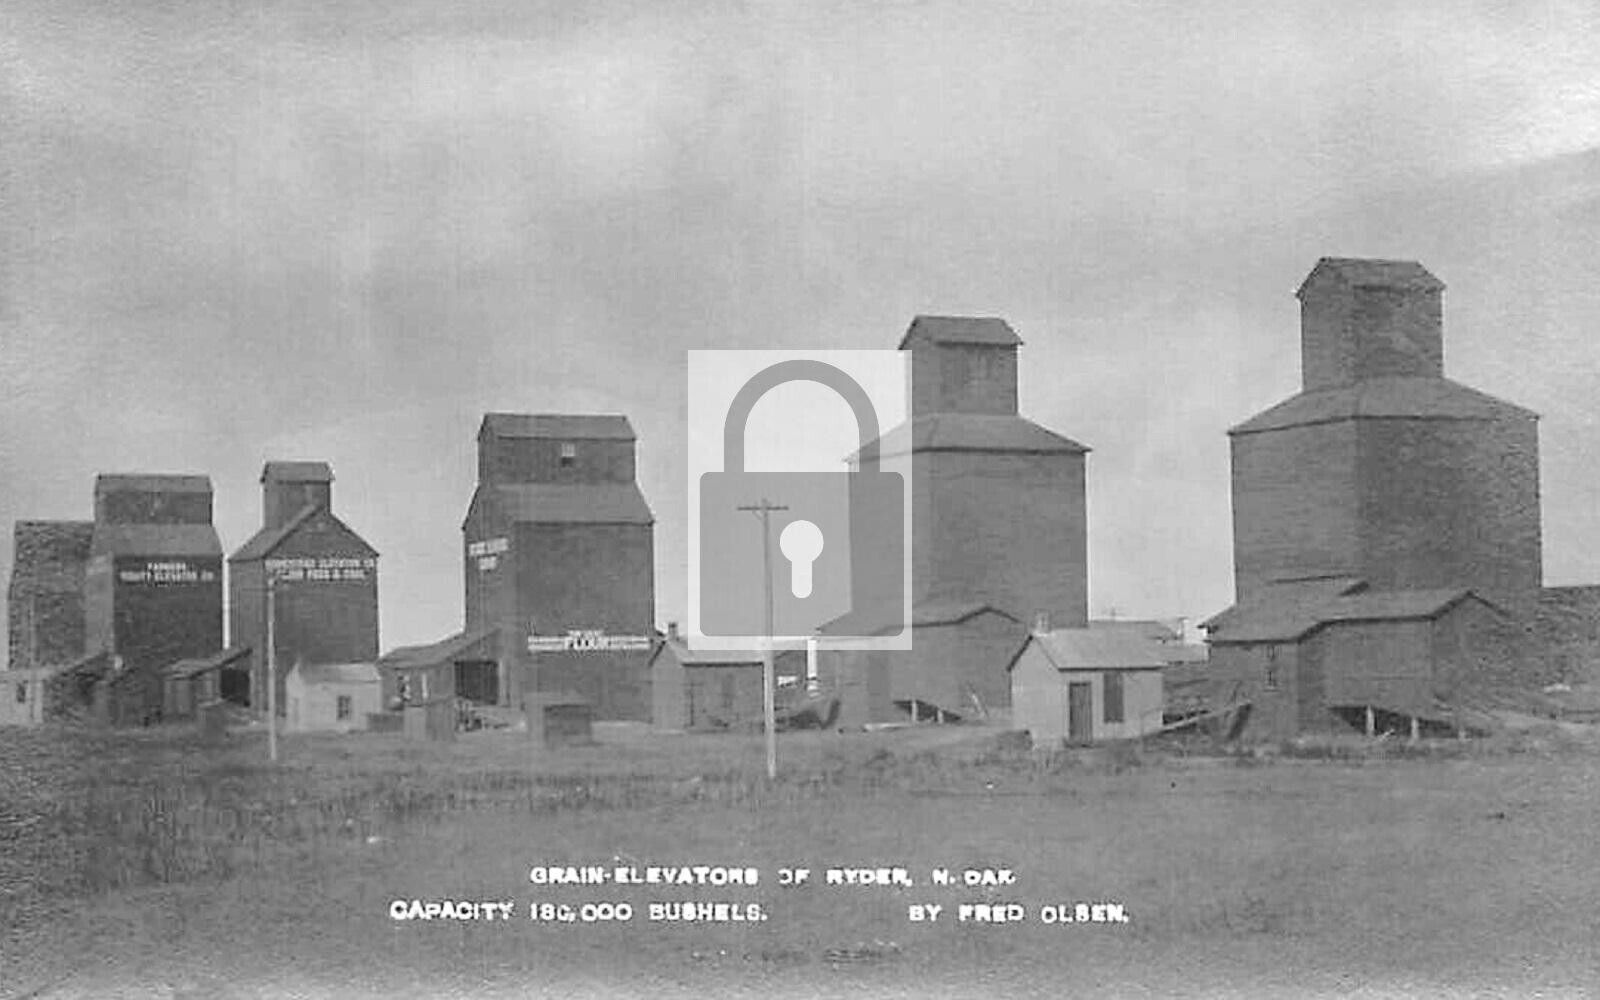 Grain Elevators Ryder North Dakota ND Reprint Postcard